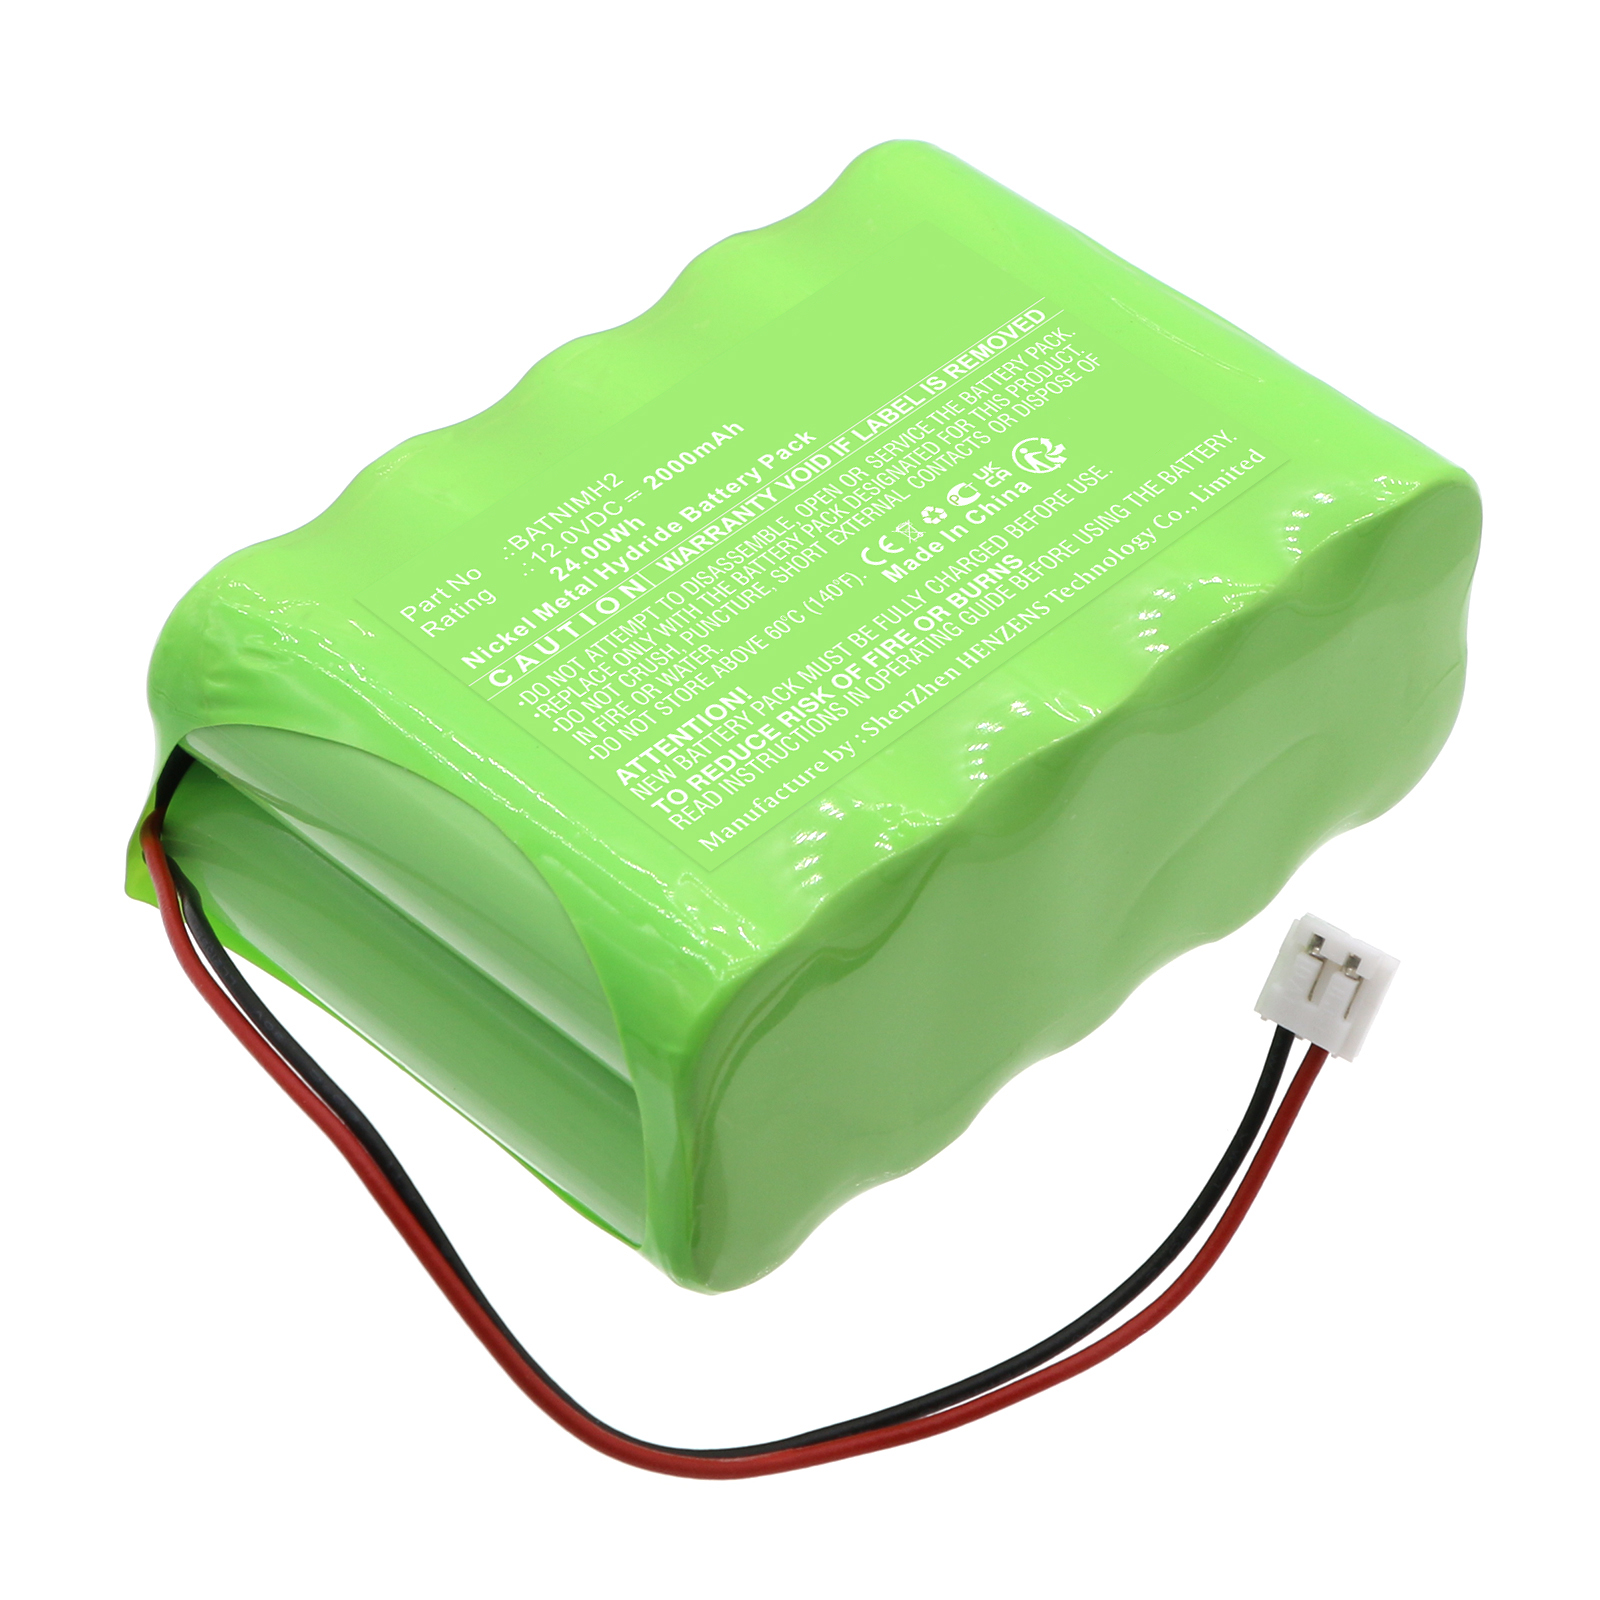 Batteries for DaitemAlarm System